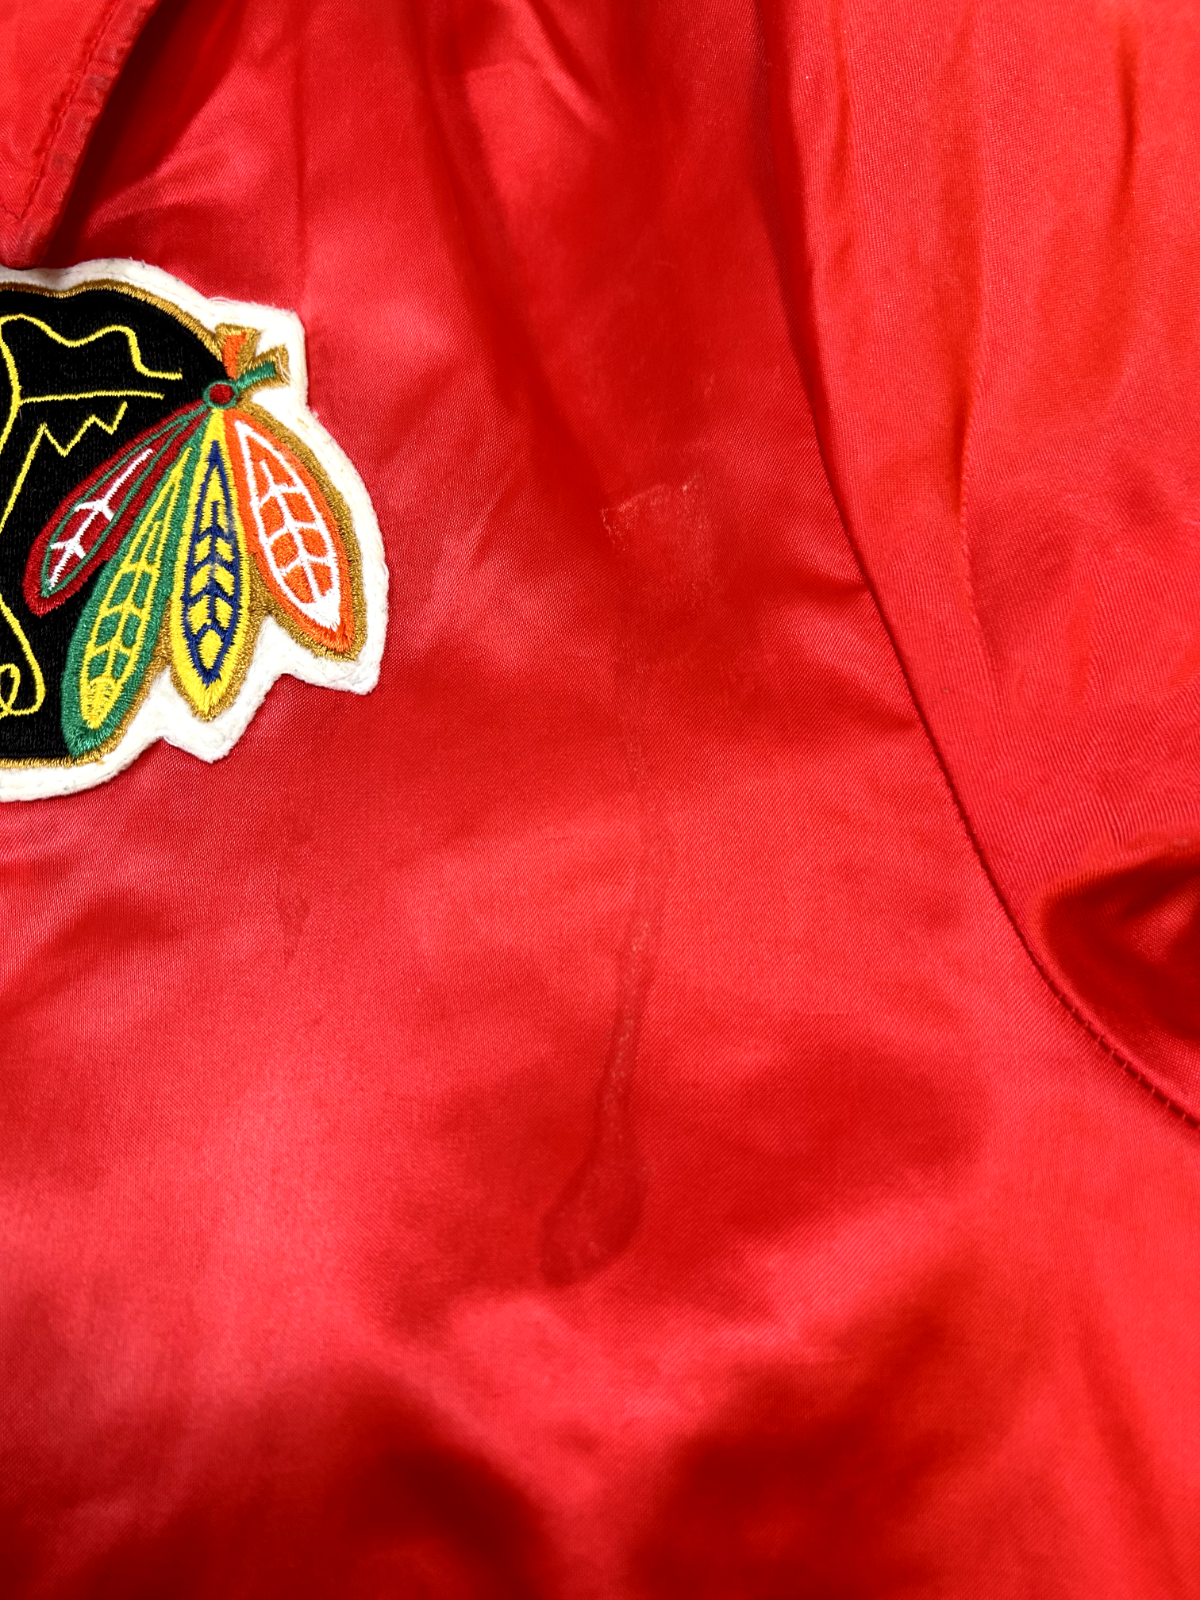 Vintage 90s Chicago Blackhawks NHL Embroidered Satin Bomber Jacket Size XL Red